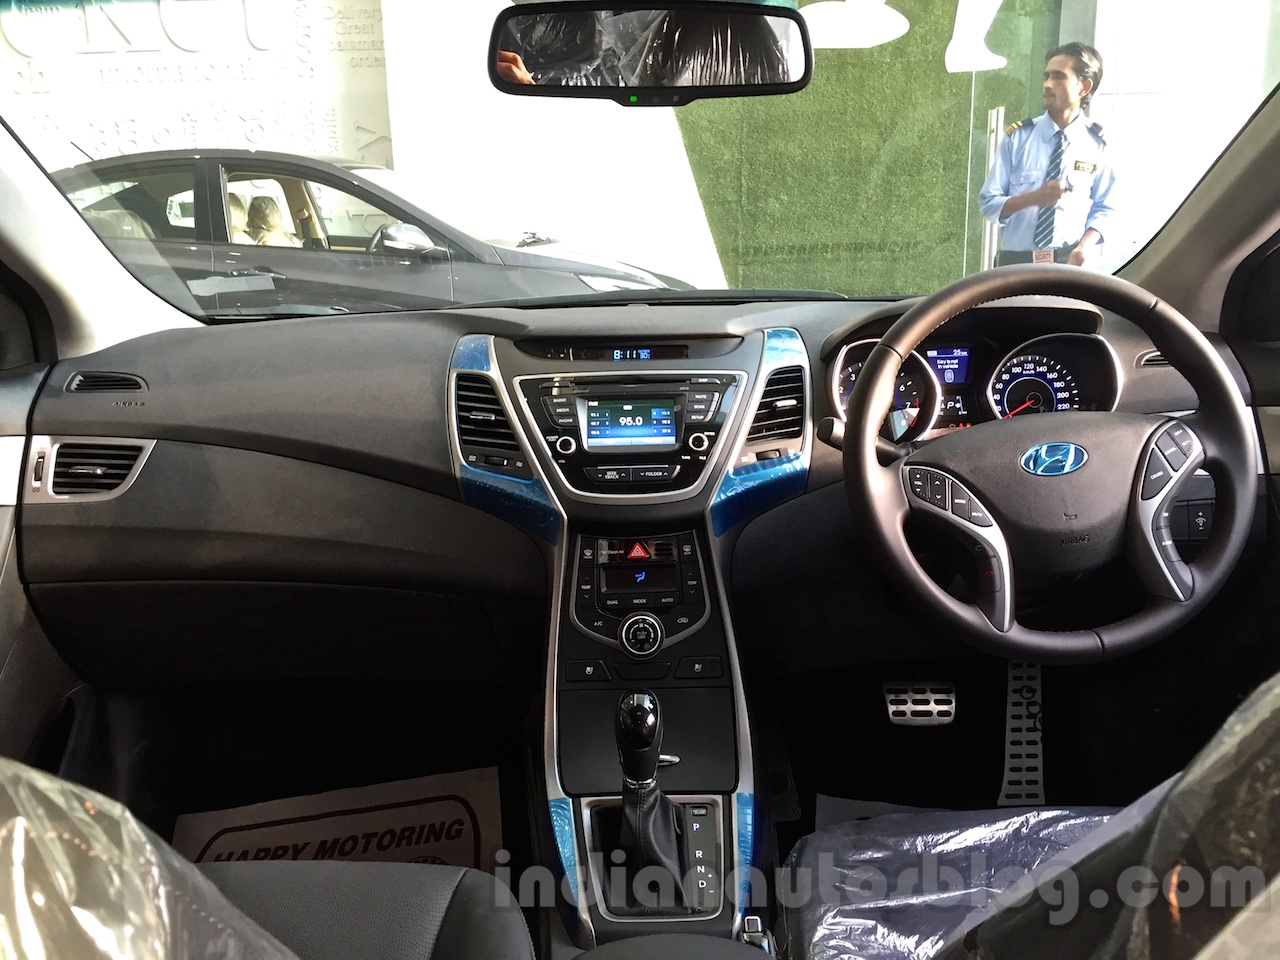 2016 Hyundai Elantra Avante Features Detailed